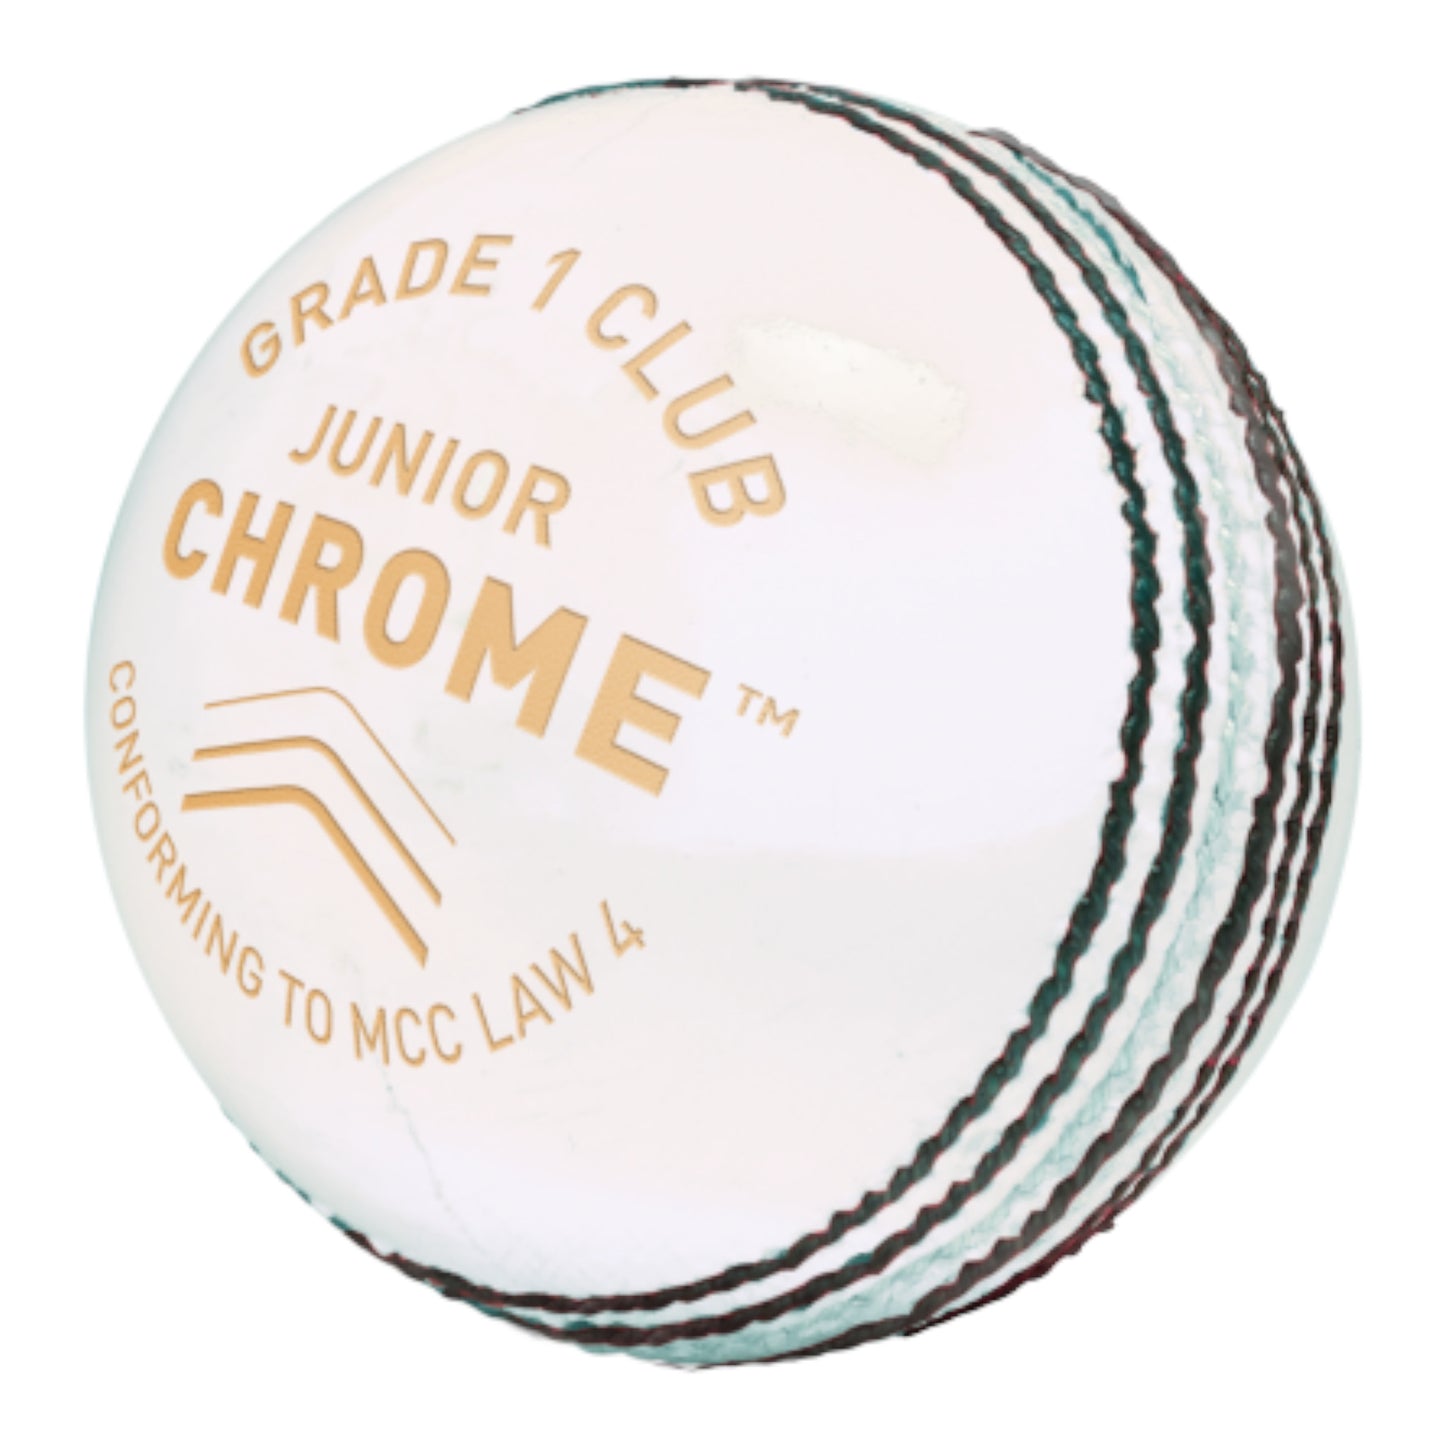 GM Chrome Cricket Ball